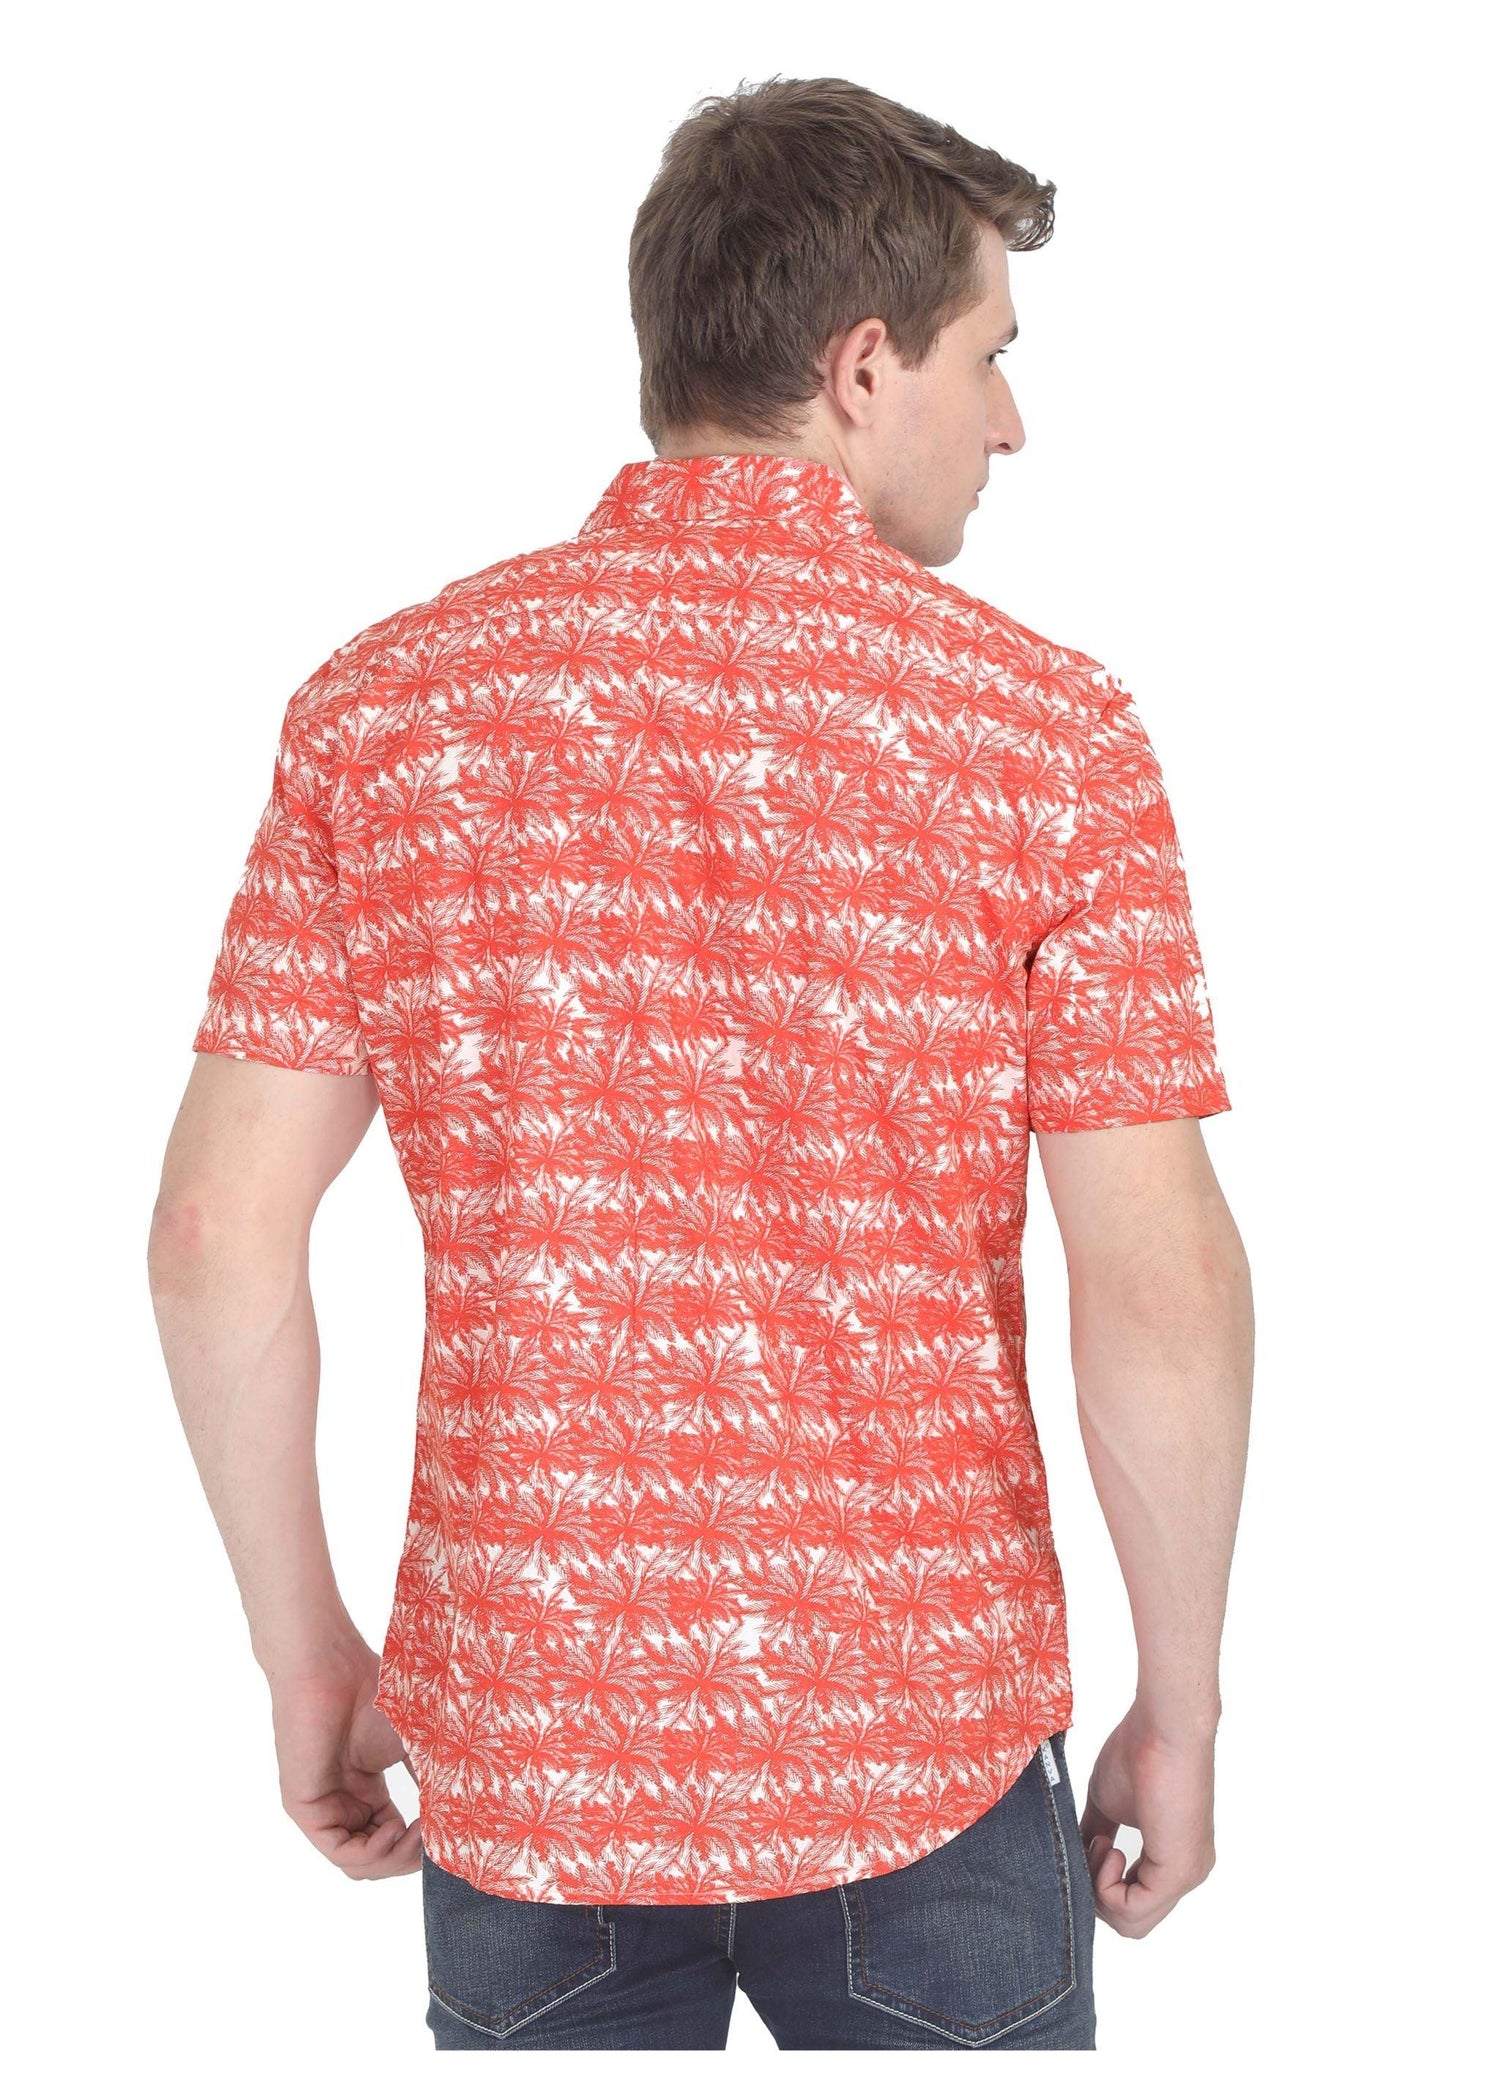 Tusok-orange-palmVacation-Printed Shirtimage-Orange Palm (5)